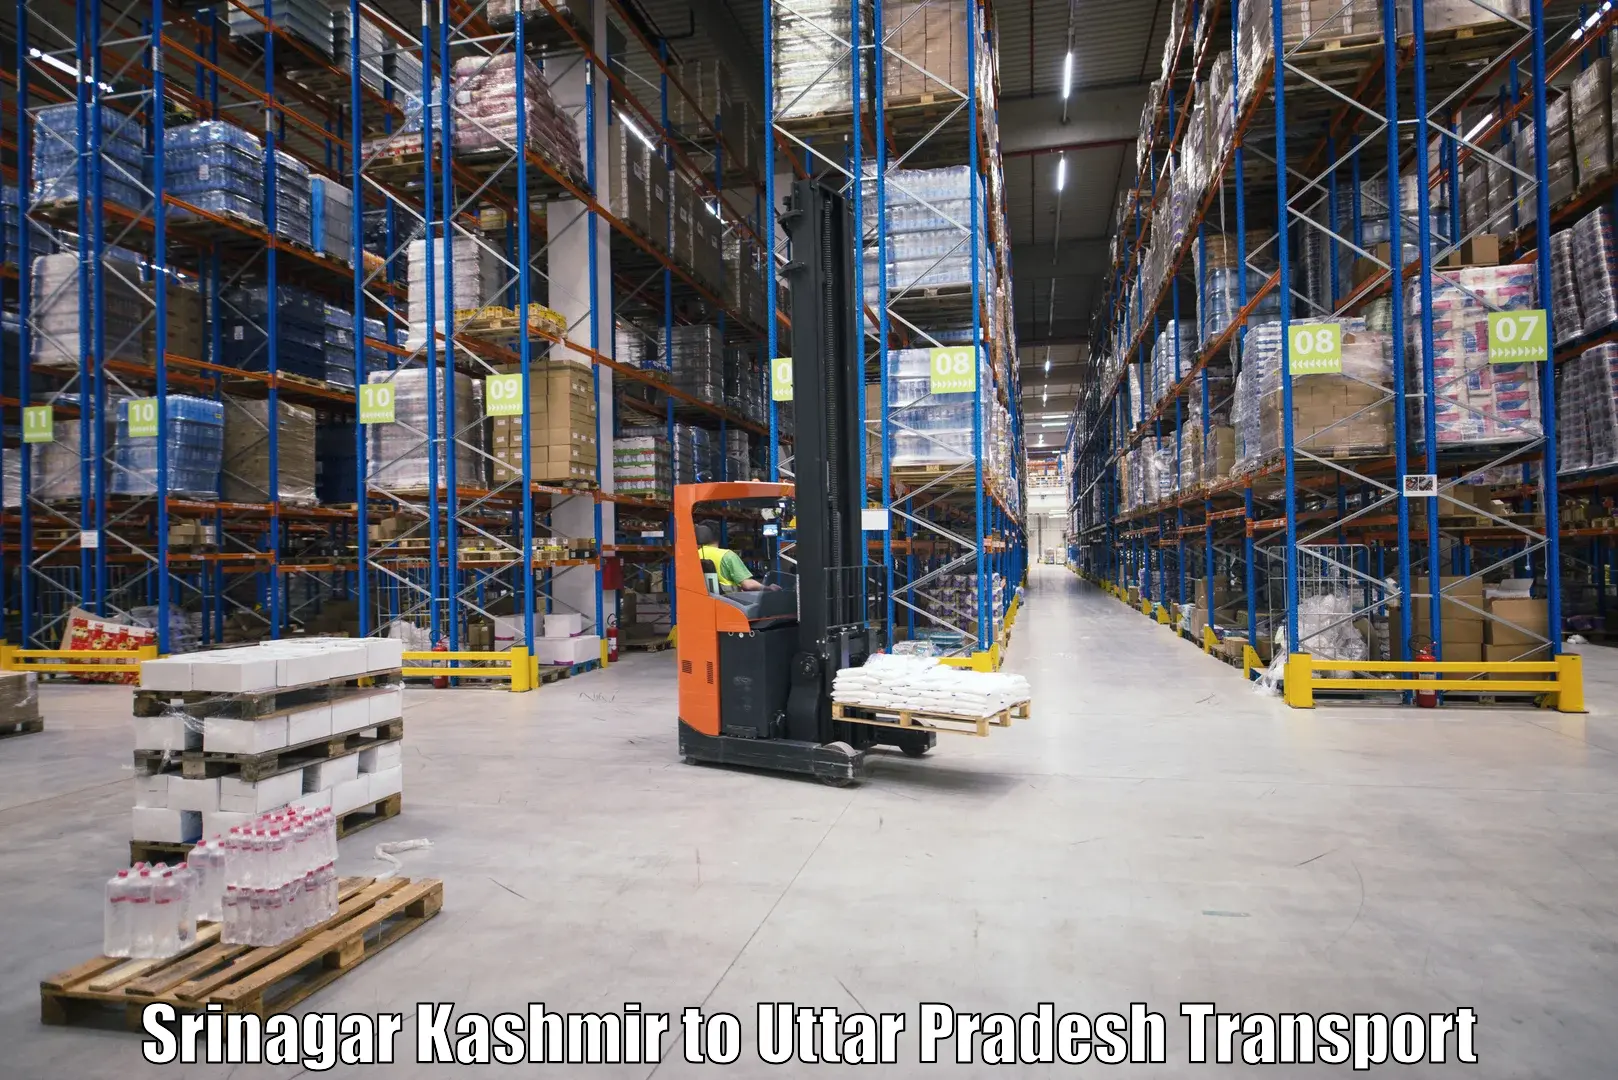 Lorry transport service Srinagar Kashmir to IIT Kanpur